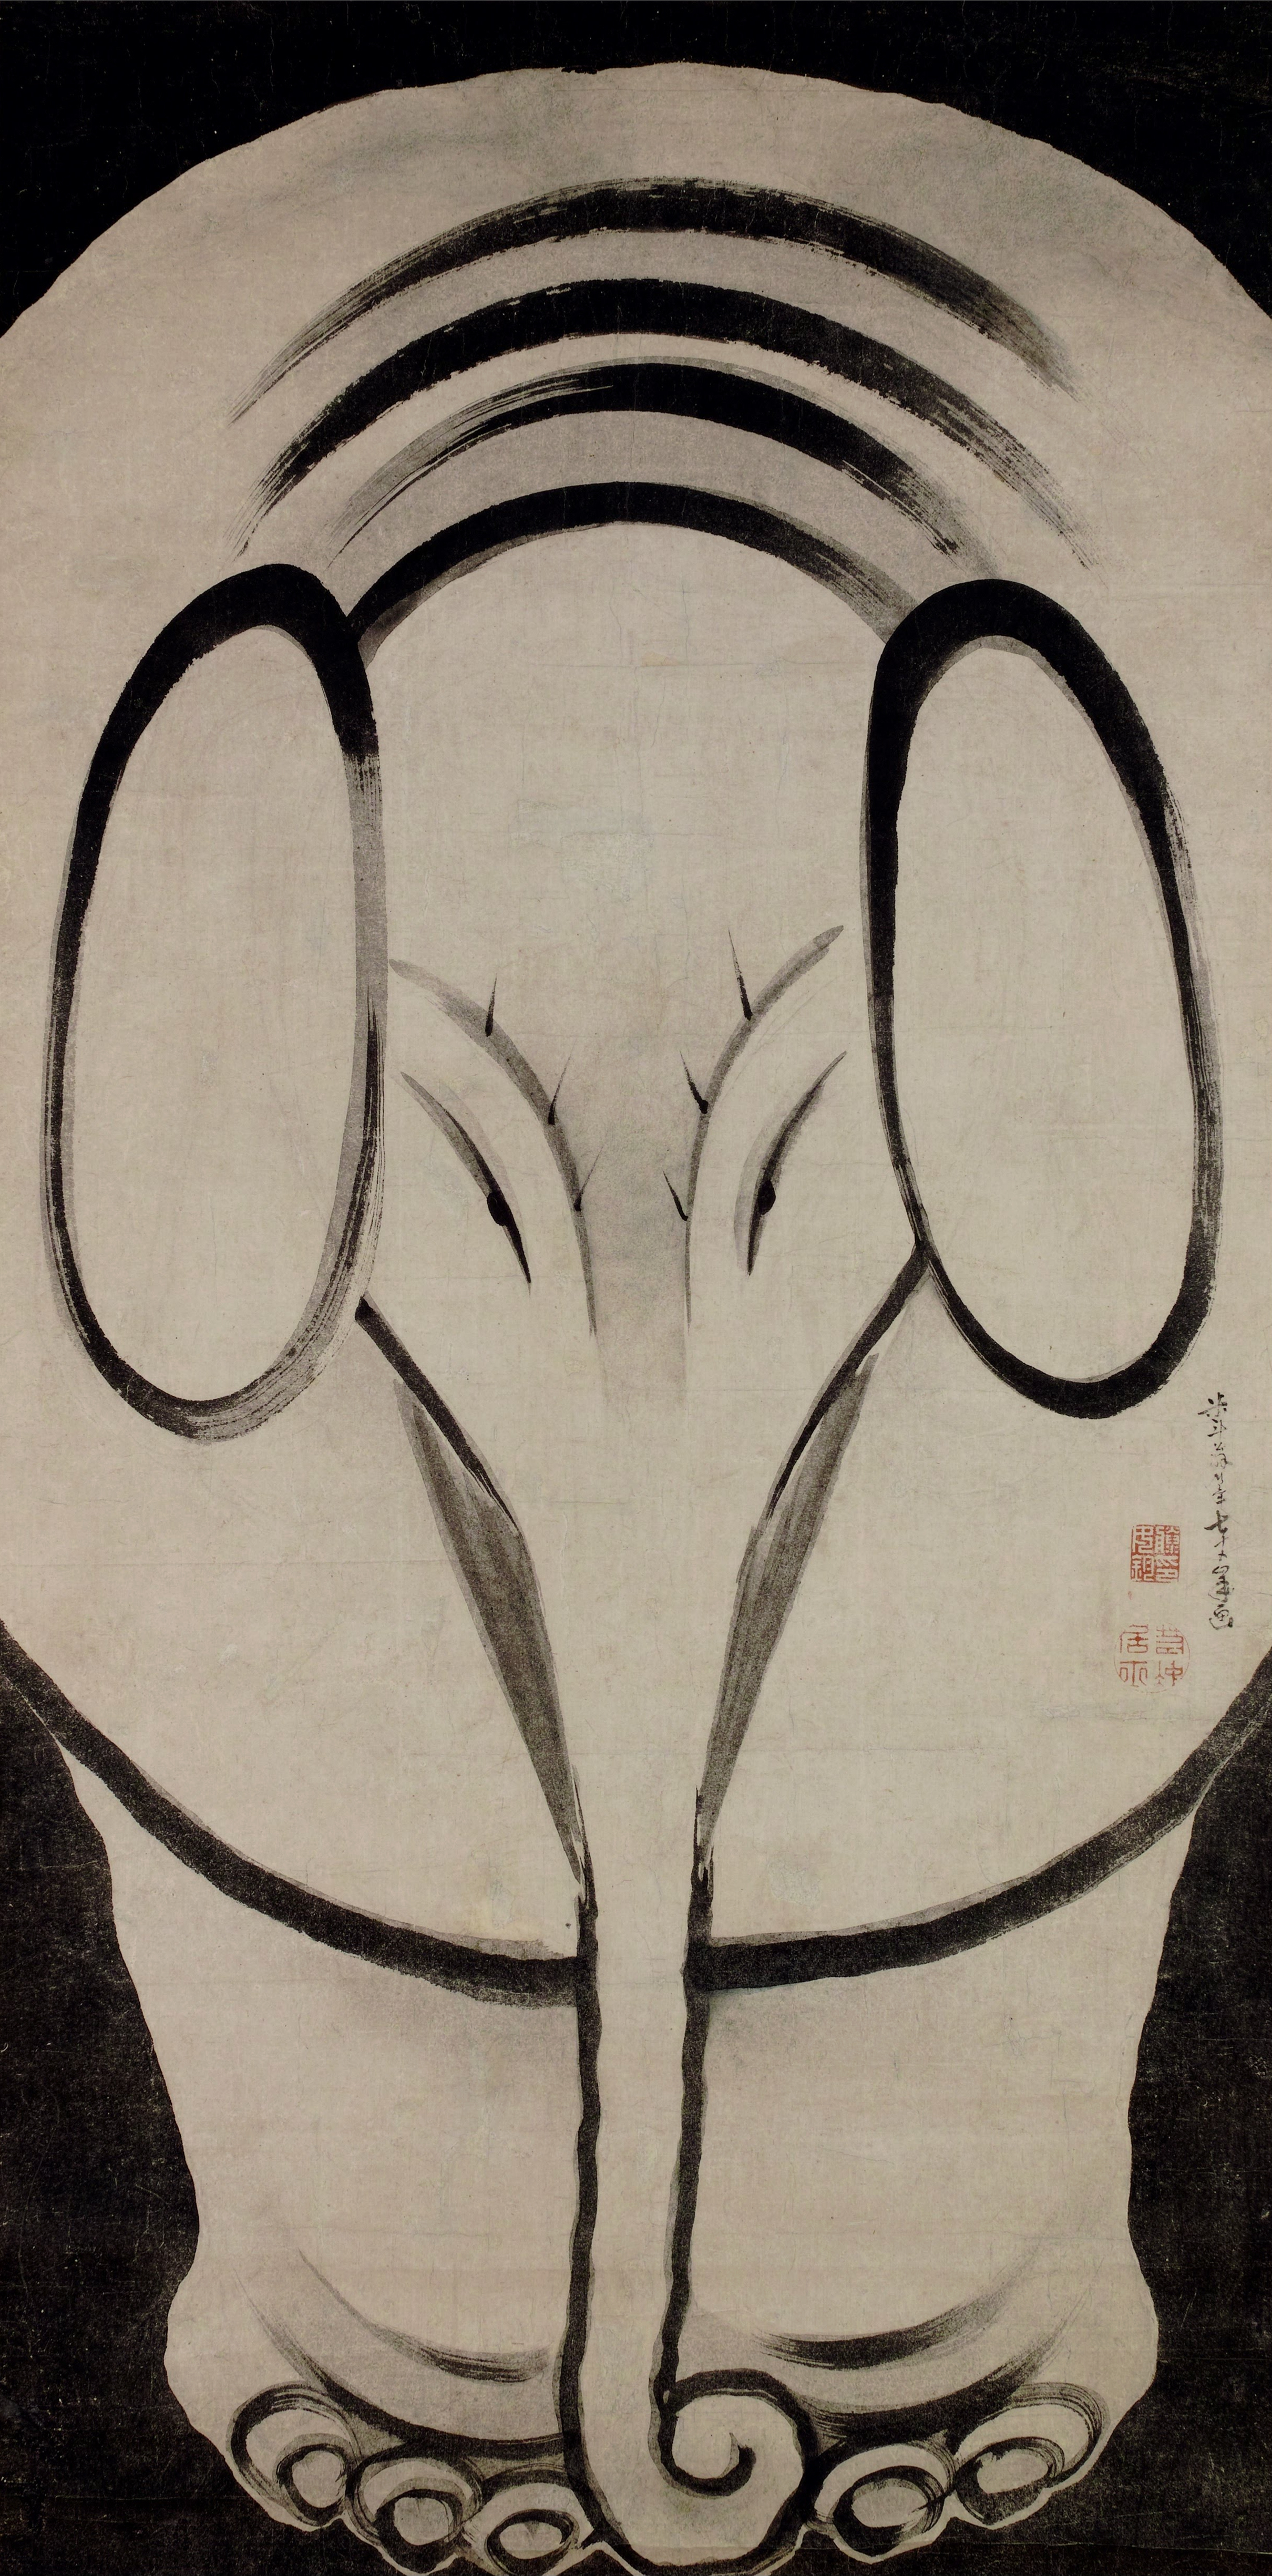 Elefante by Itō Jakuchū - 1790 - 155,50 cm x 77,30 cm 